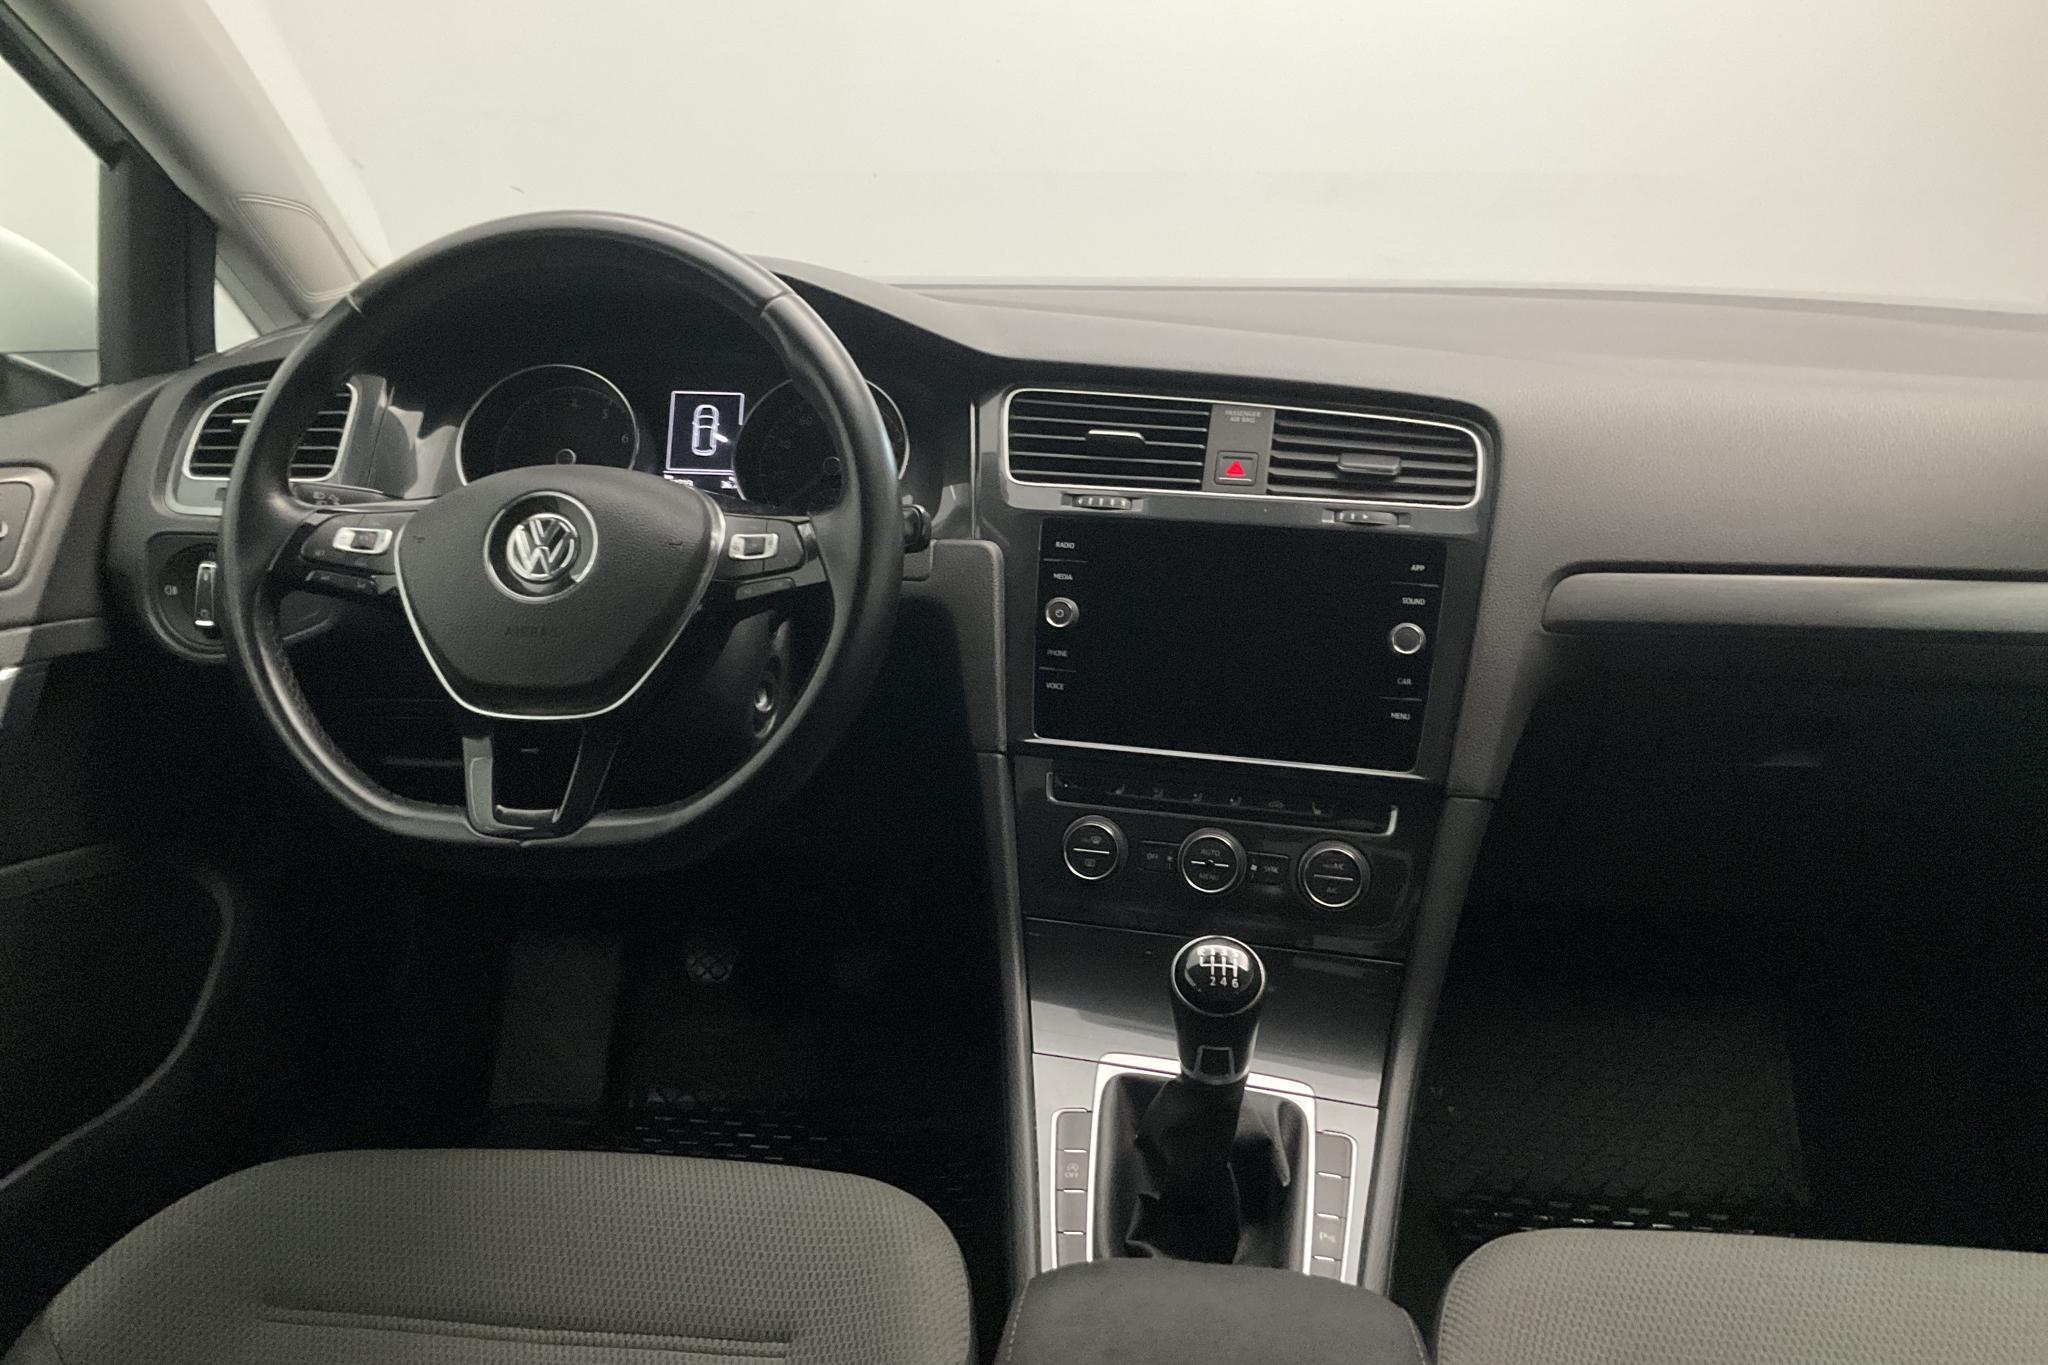 VW Golf VII 1.4 TSI Multifuel 5dr (125hk) - 151 710 km - Manual - white - 2018